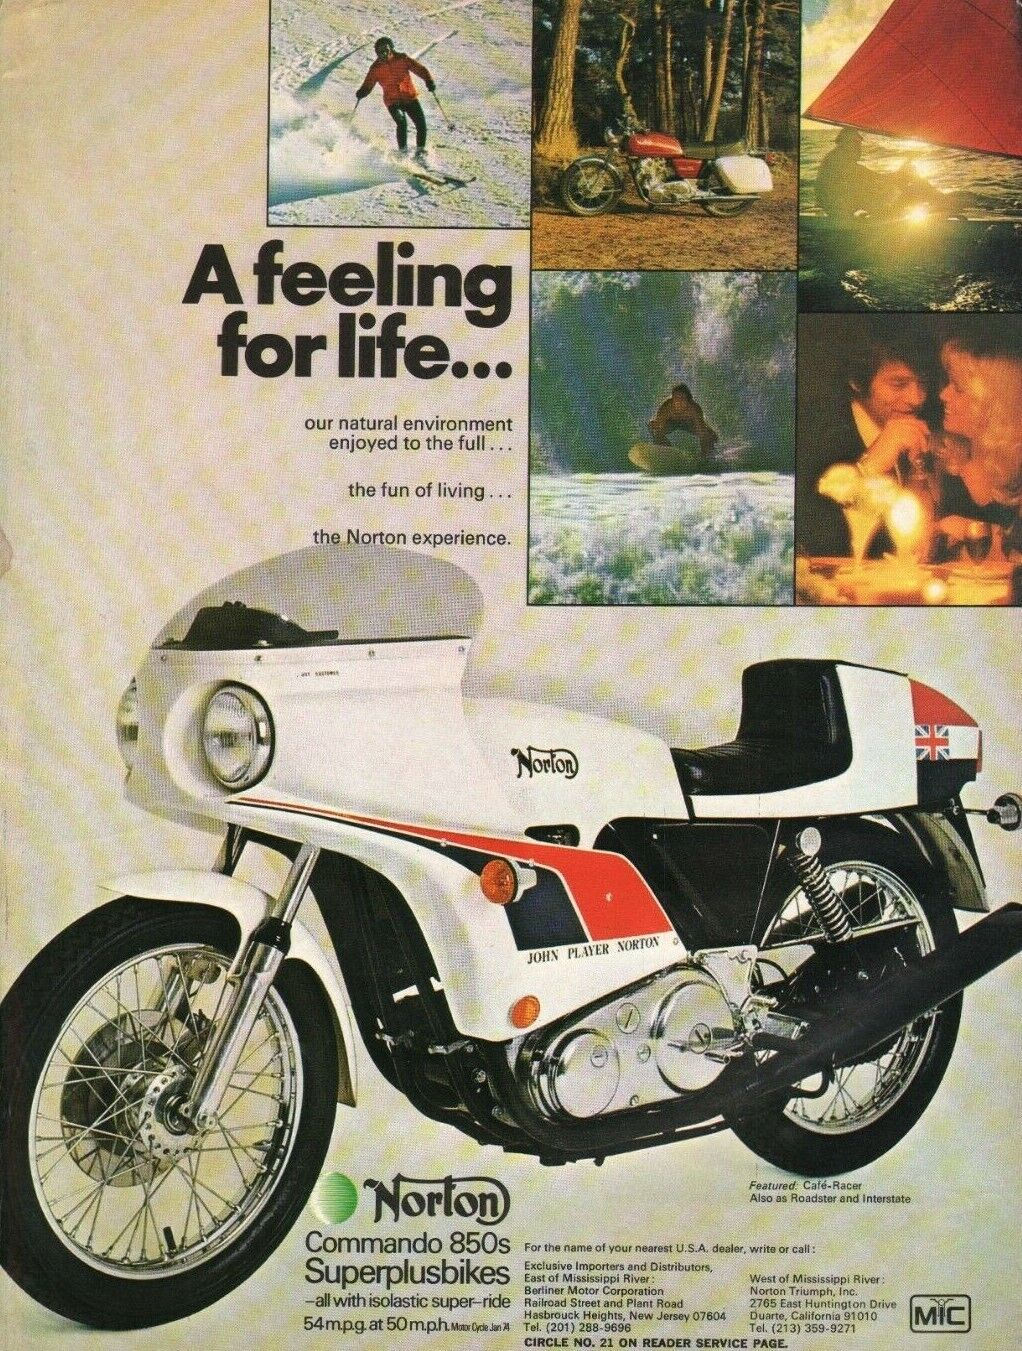 1974 Norton Commando 850 John Player Cafe Racer - Vintage Motorcycle Ad